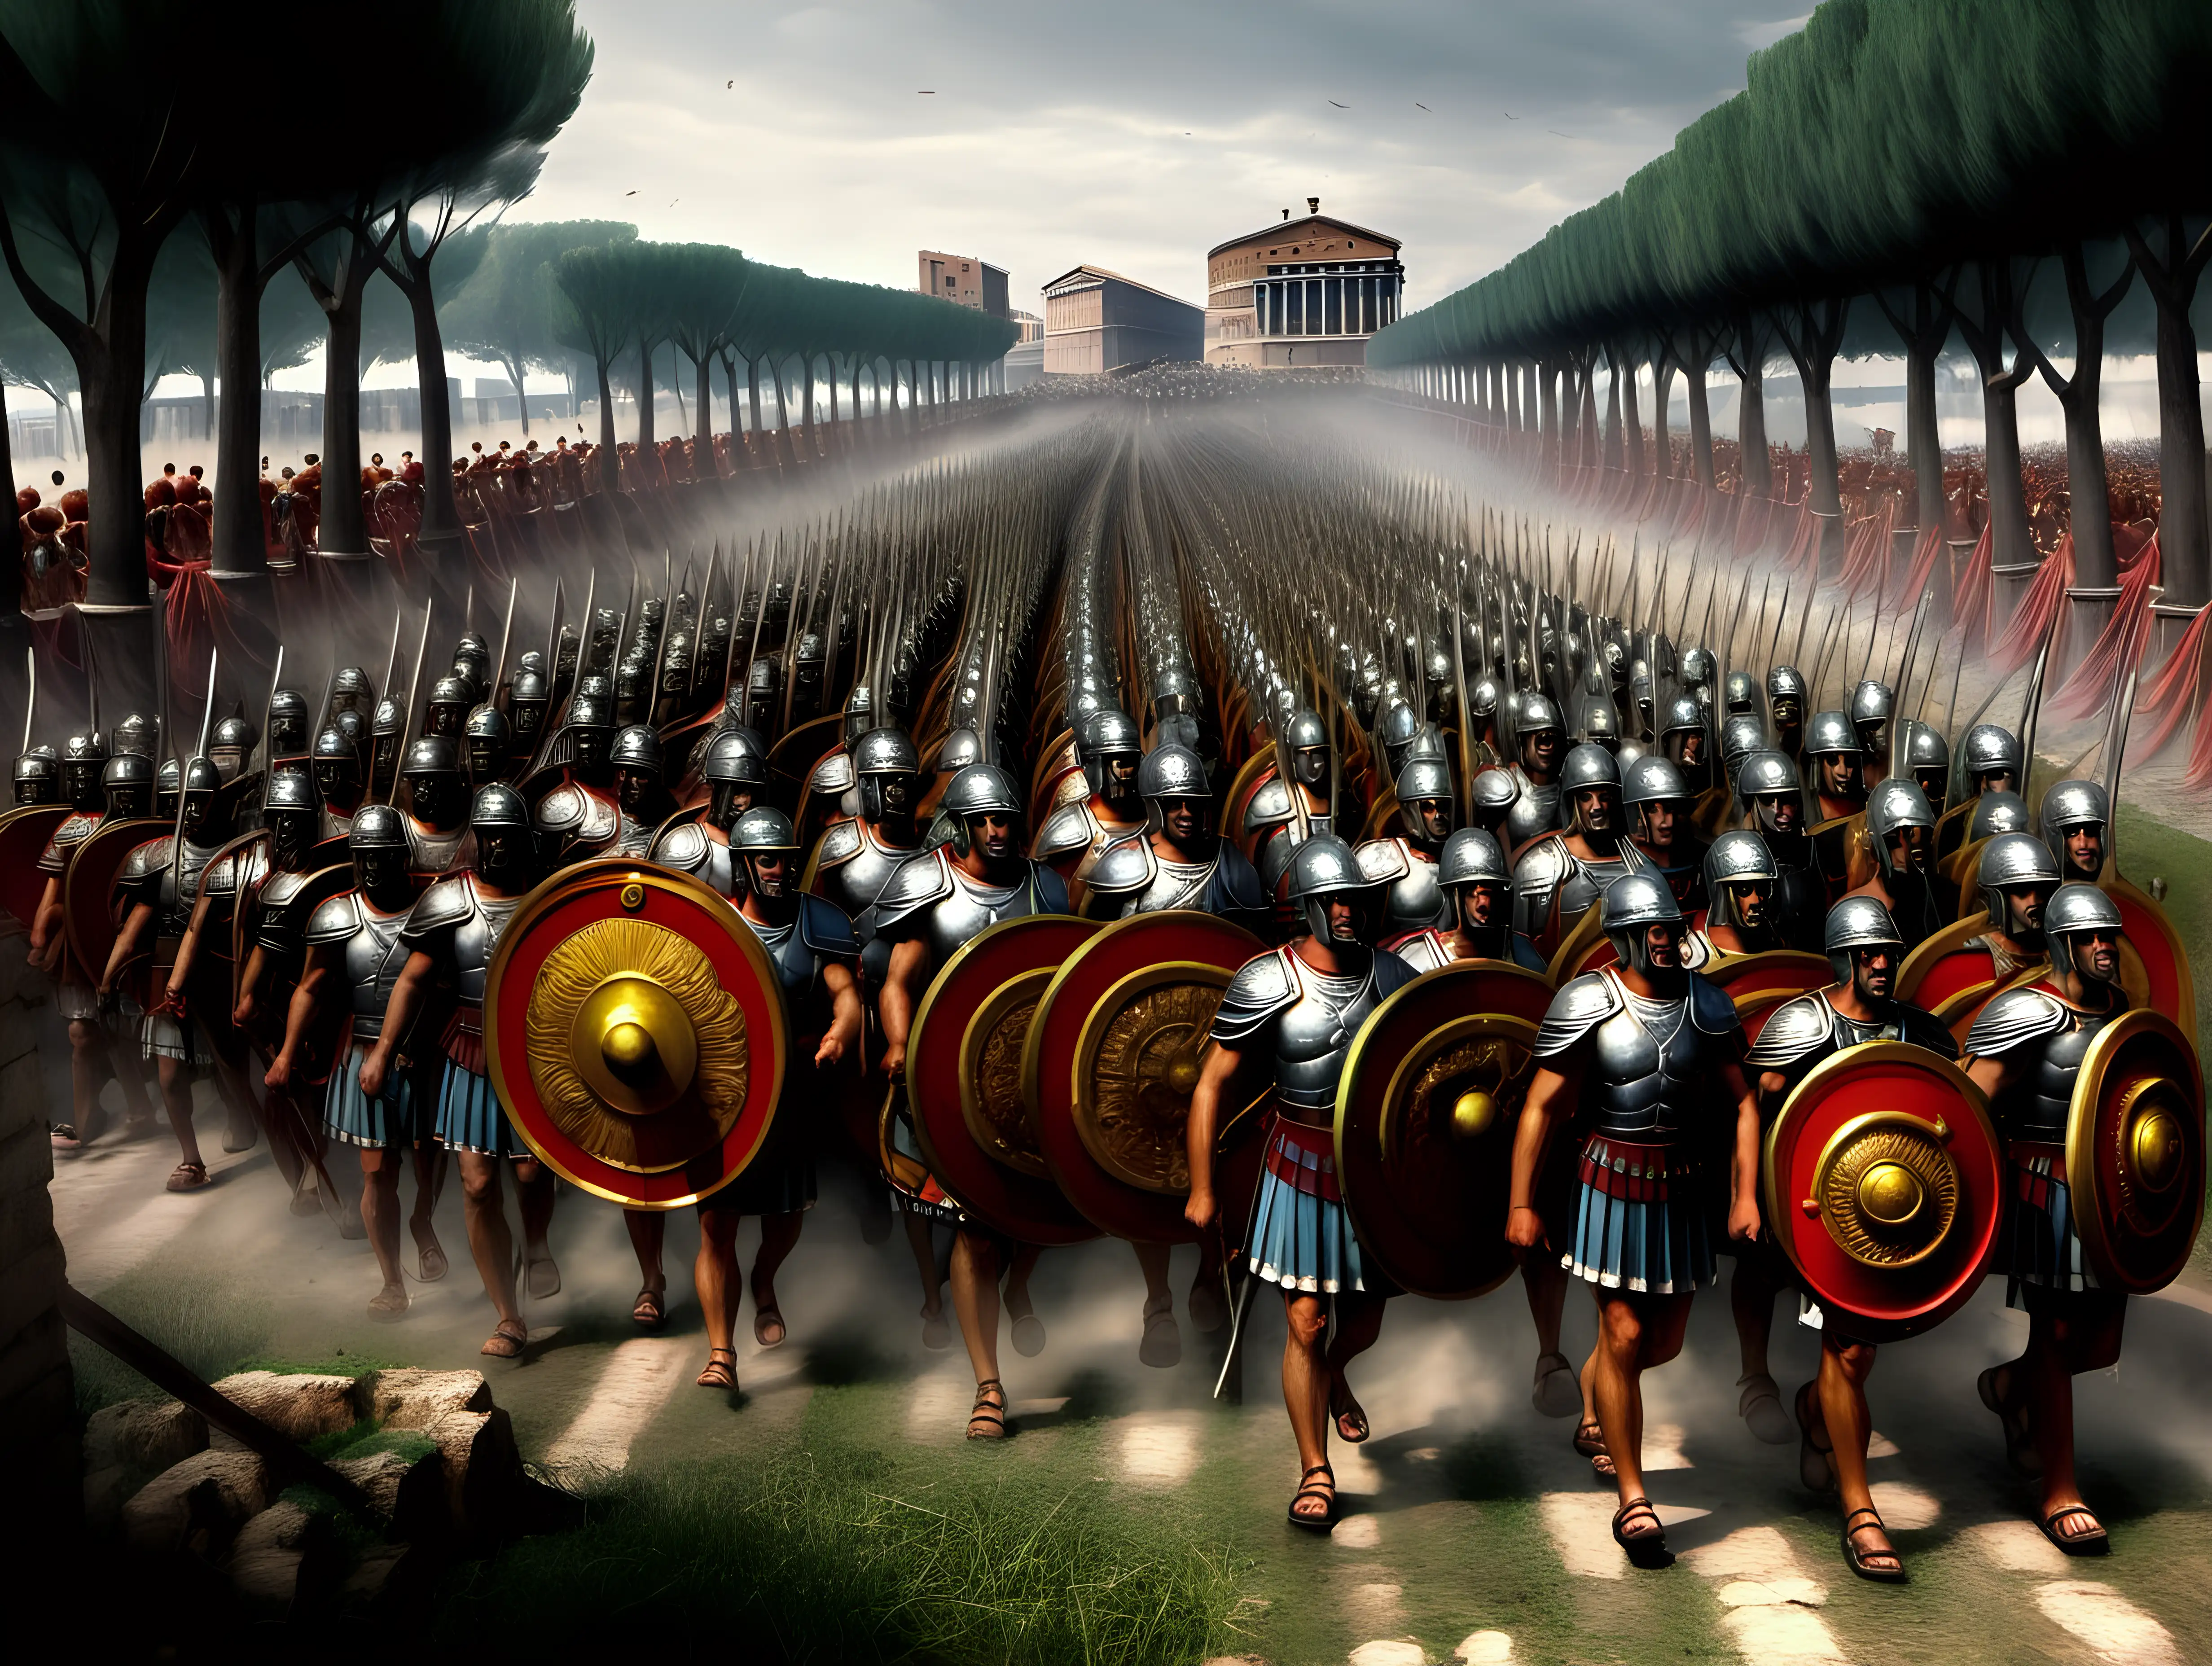 Roman army marching toward Rome